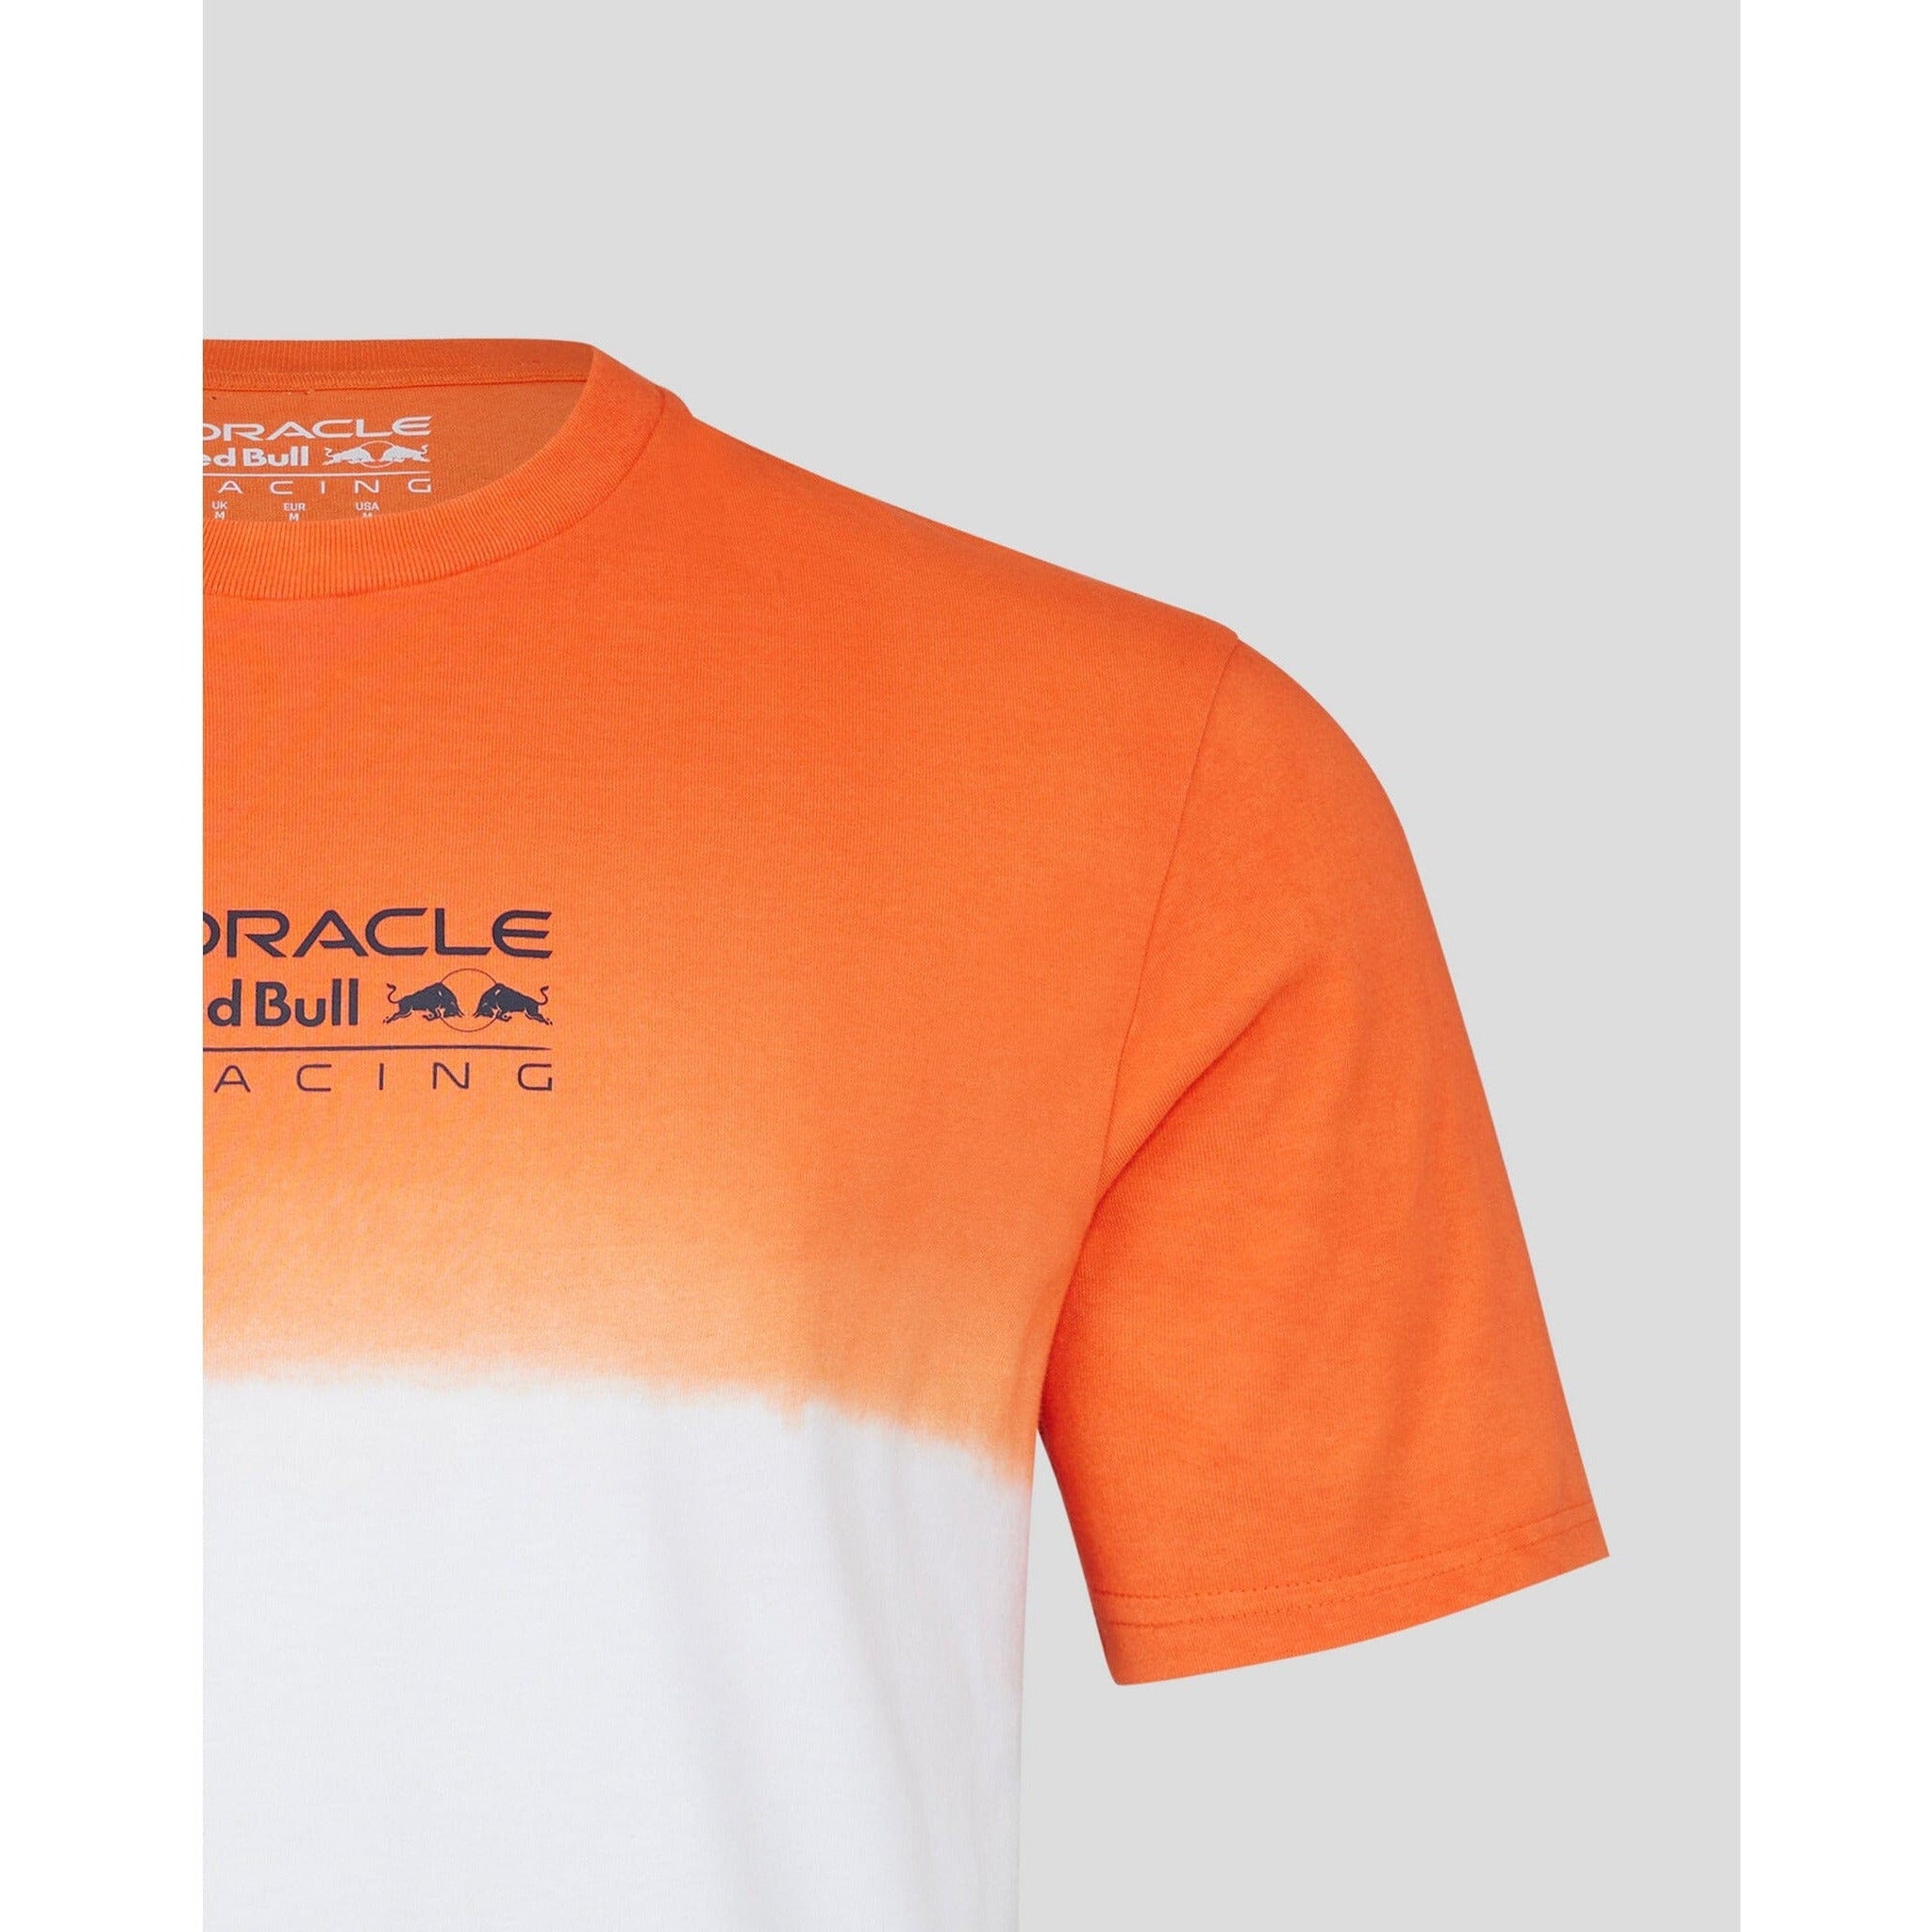 Oracle Red Bull Racing Max Verstappen Sportswear T-Shirt - Orange